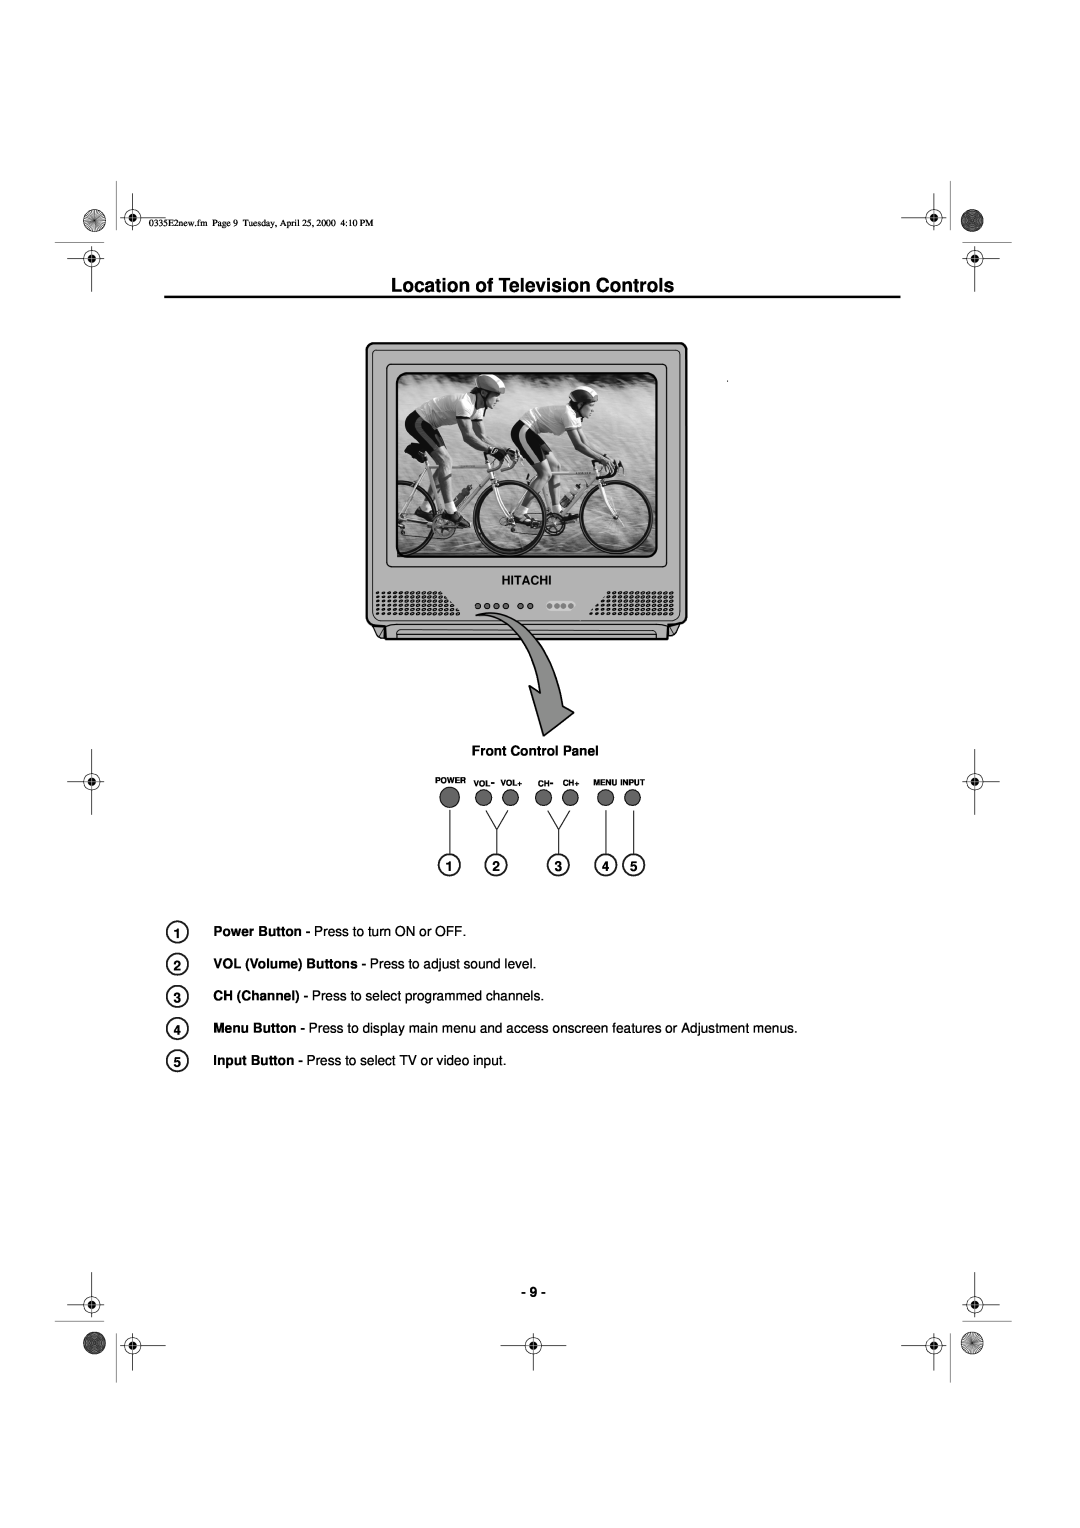 Hitachi 27GX01B manual Location of Television Controls, Front Control Panel 